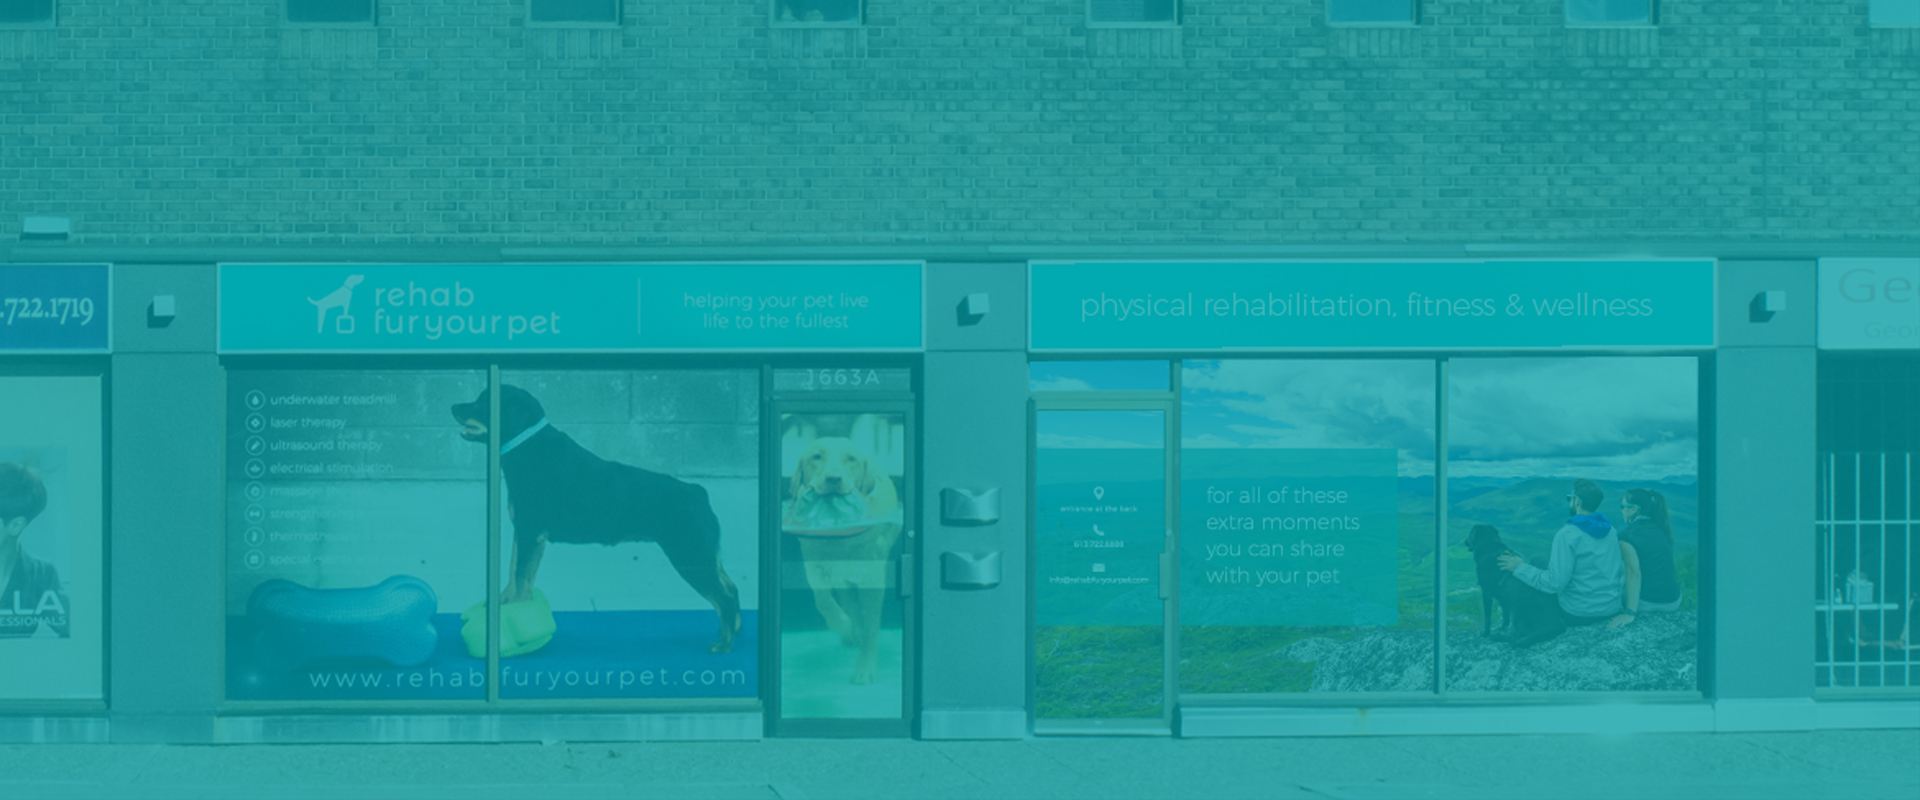 Ottawa's Independent Animal Rehabilitation, Fitness and Wellness Centre